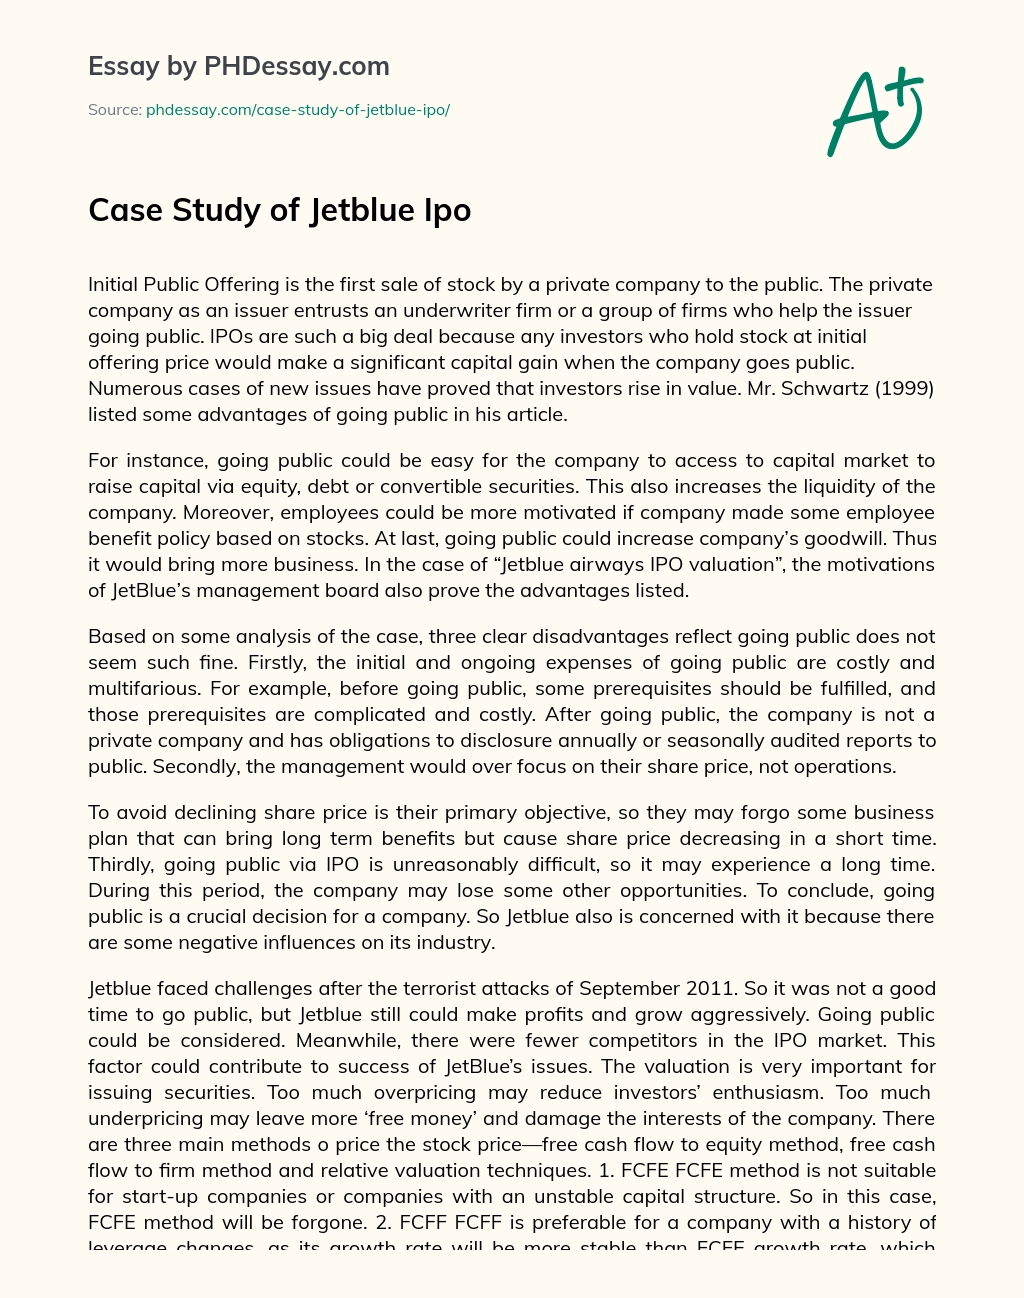 Case Study of Jetblue Ipo essay